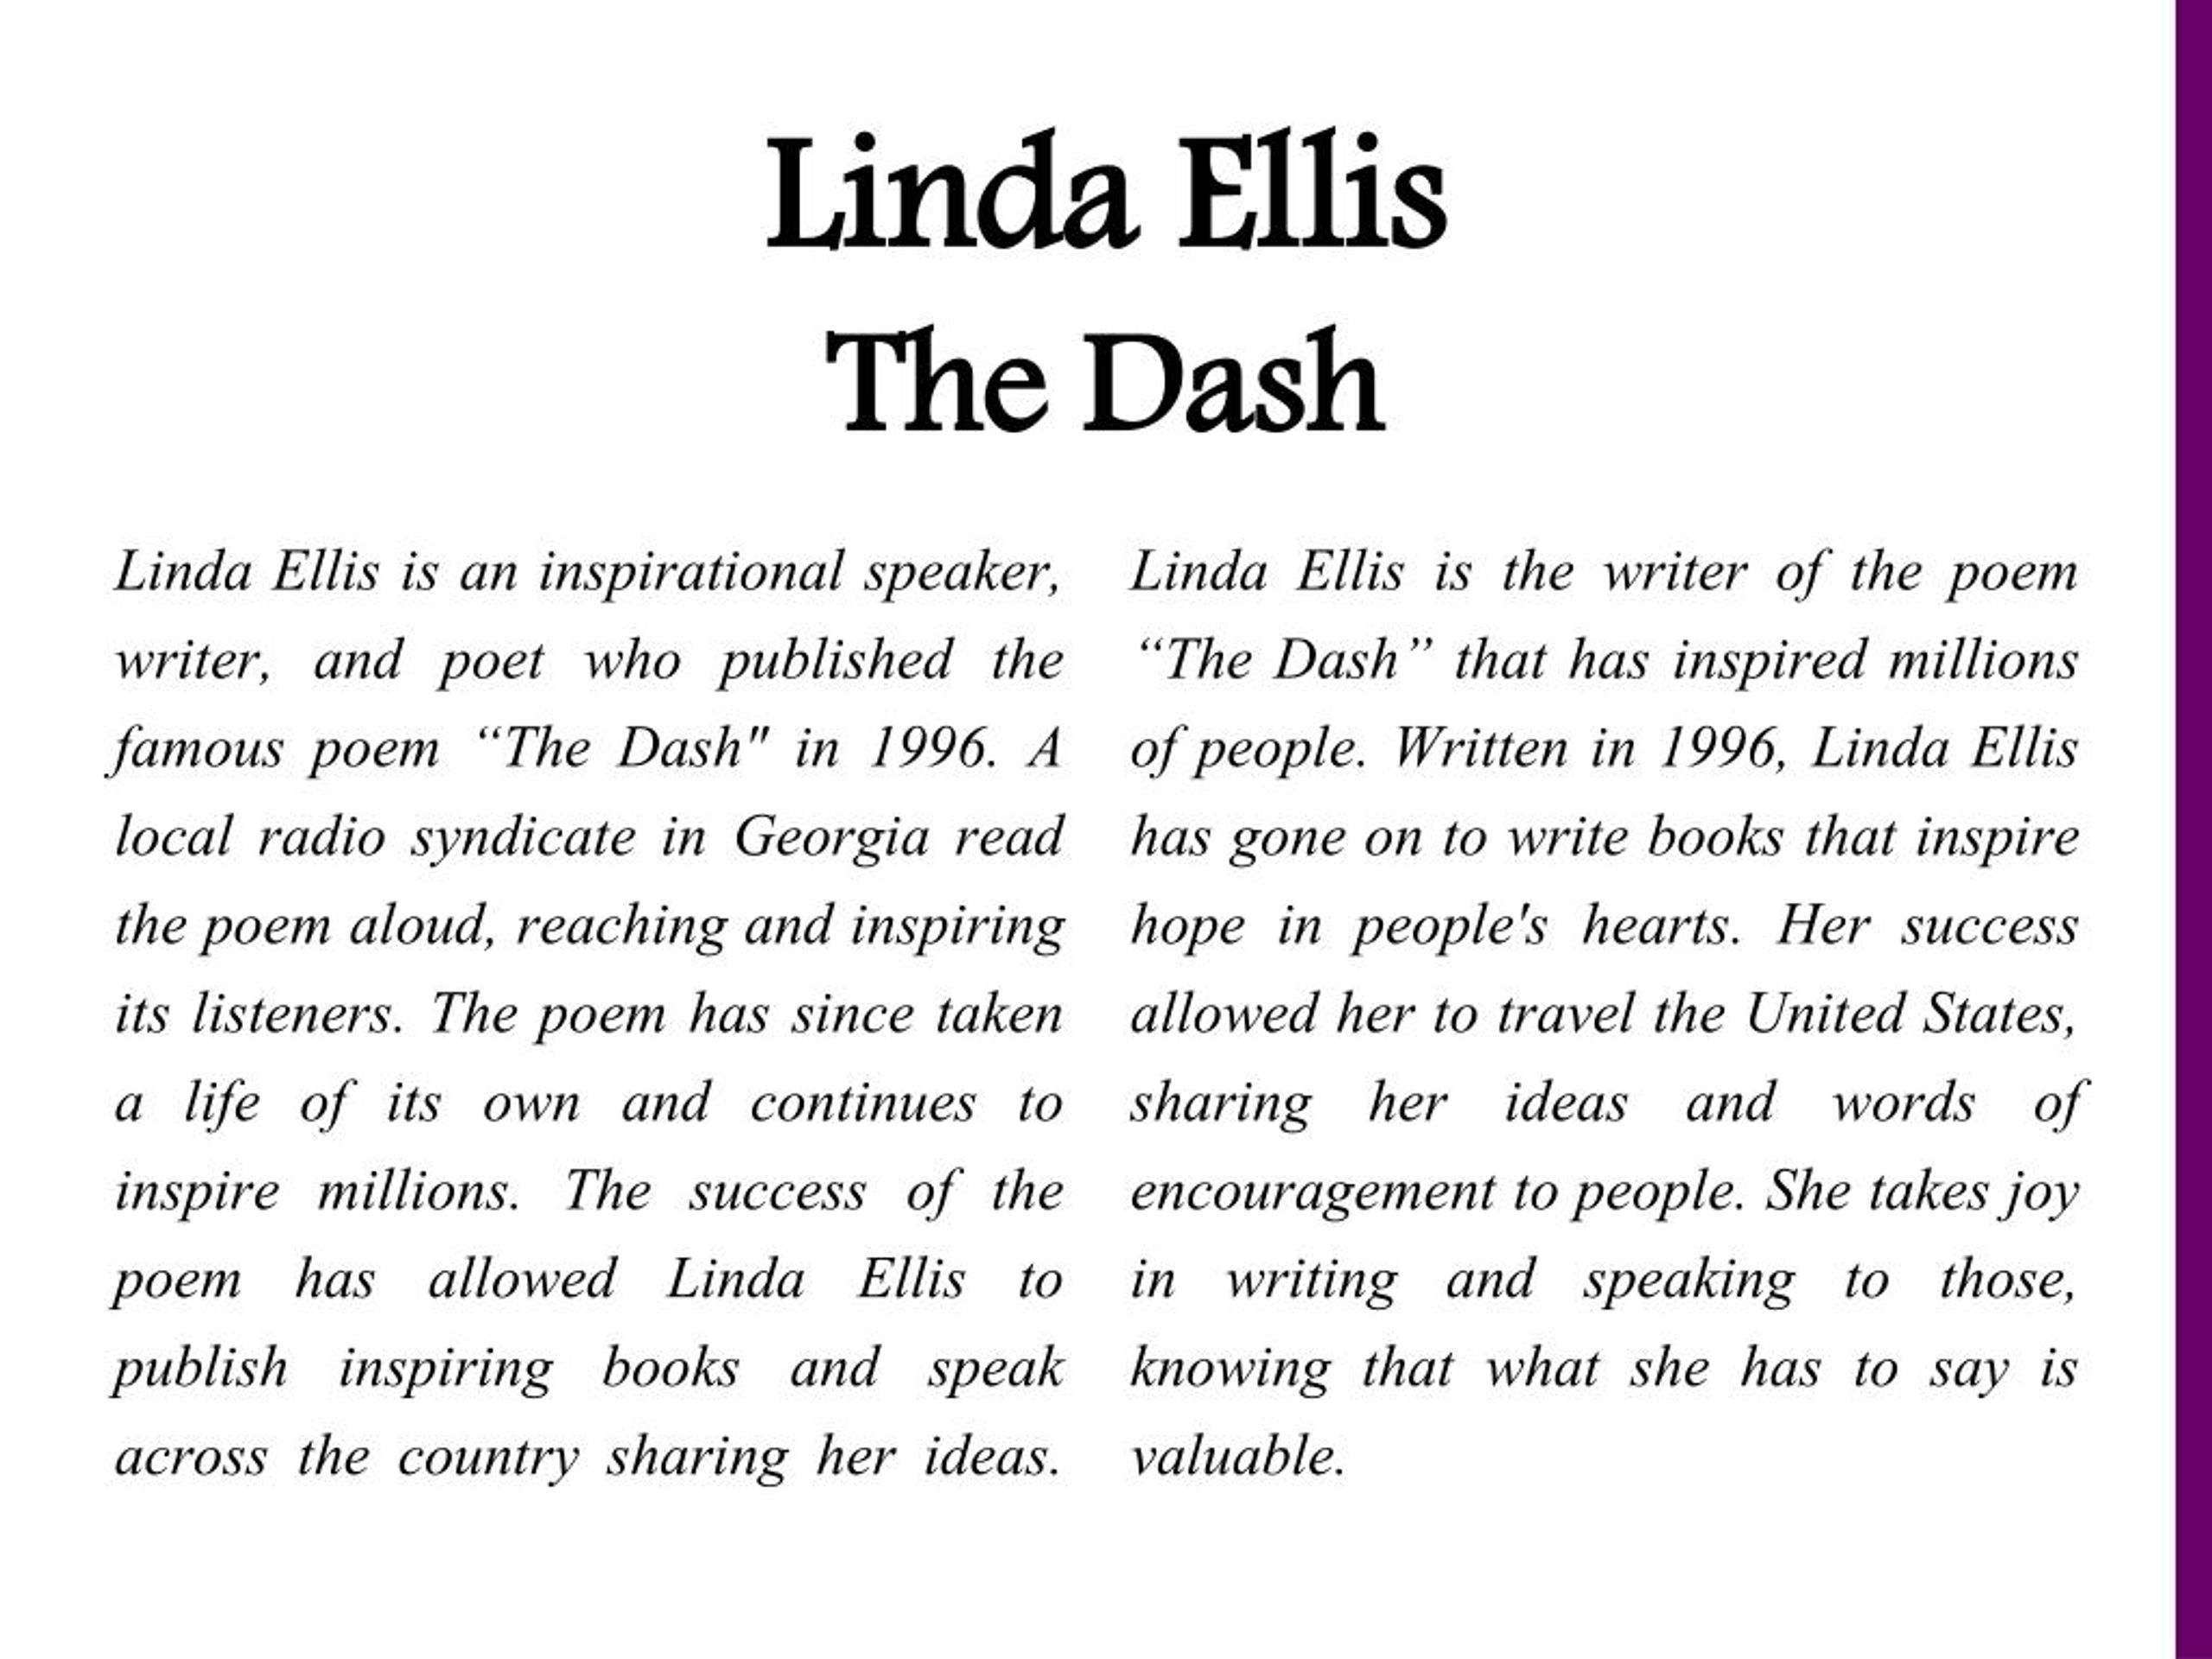 https://image4.slideserve.com/7183730/linda-ellis-the-dash-l.jpg